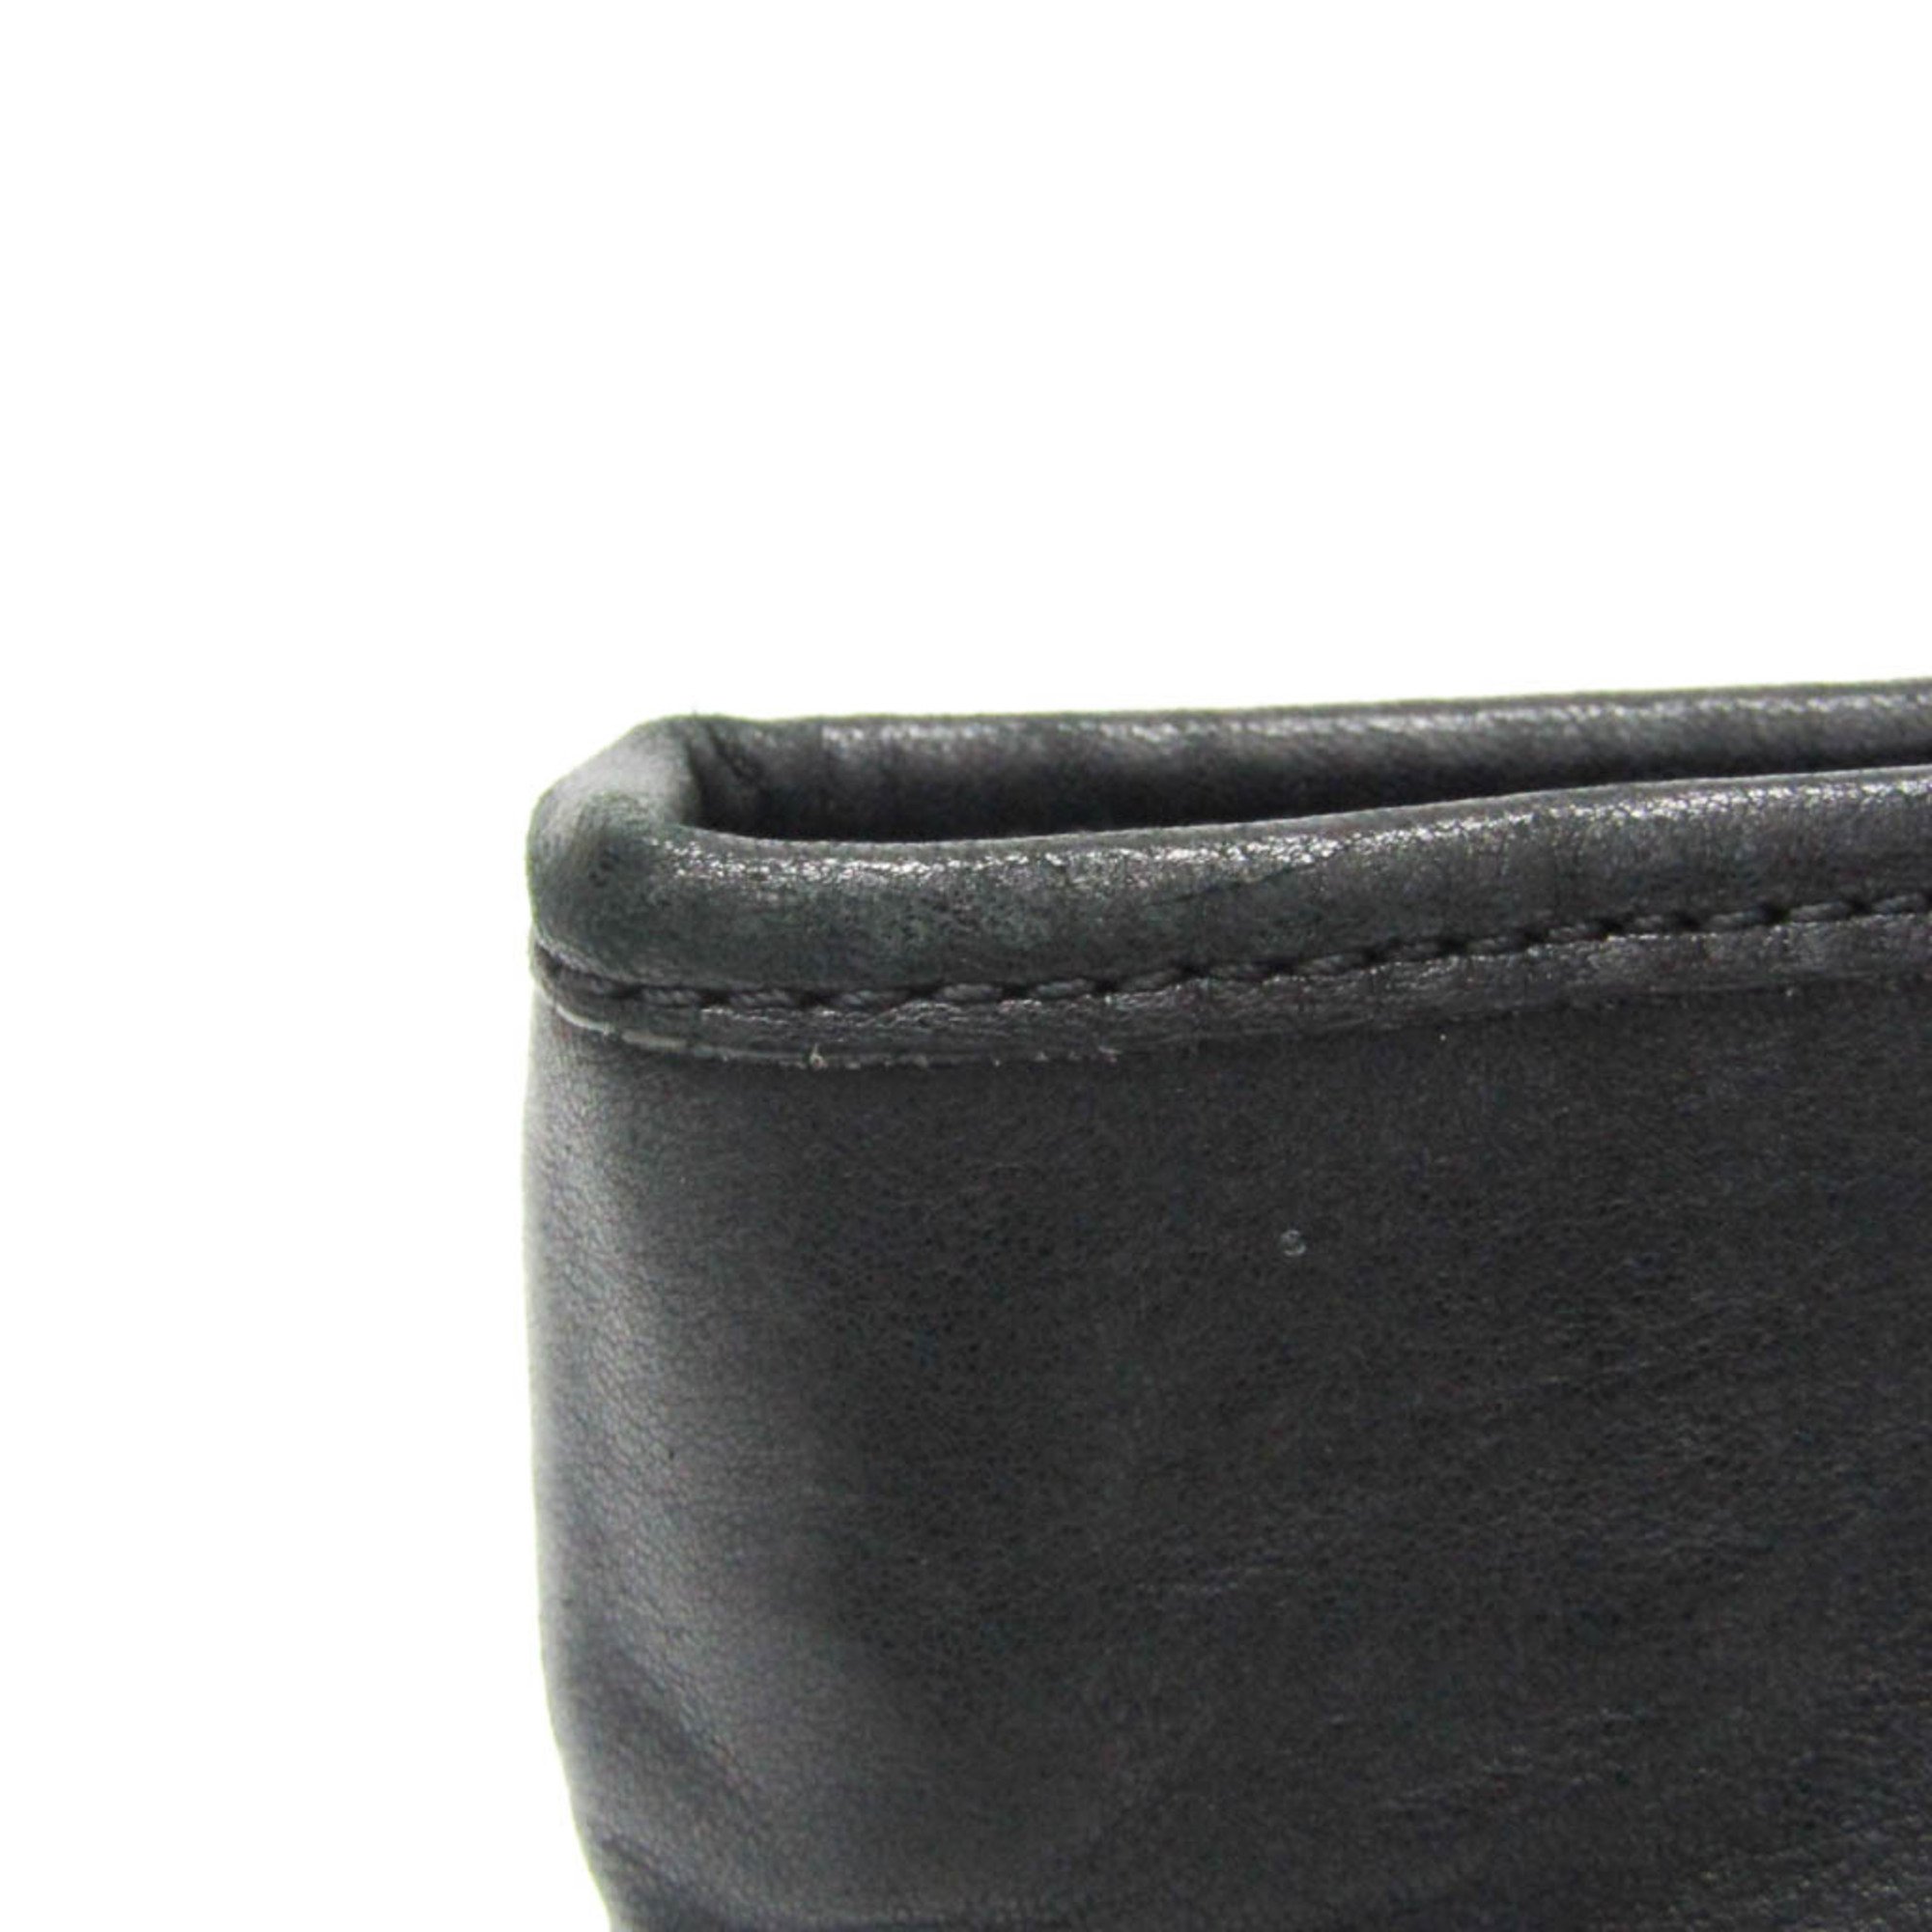 Jimmy Choo Women's Leather Studded Handbag Black